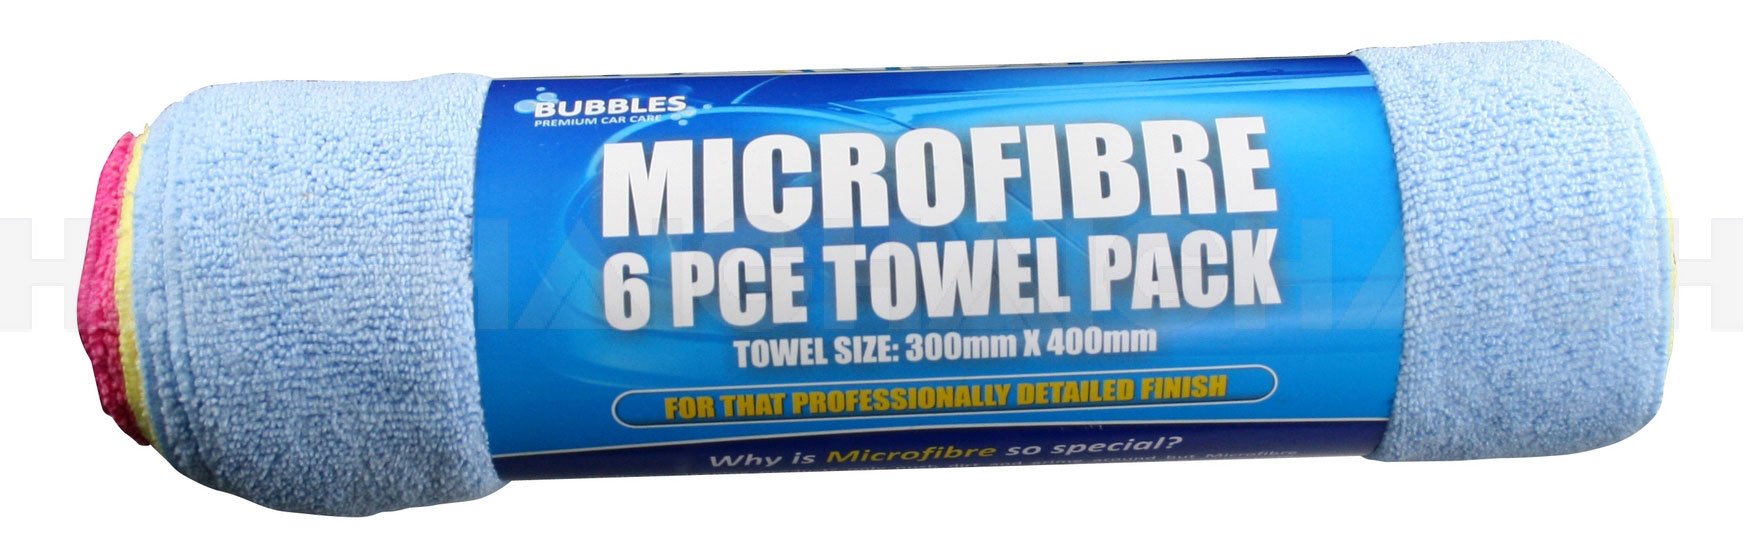 Towels Microfibre 6 Piece